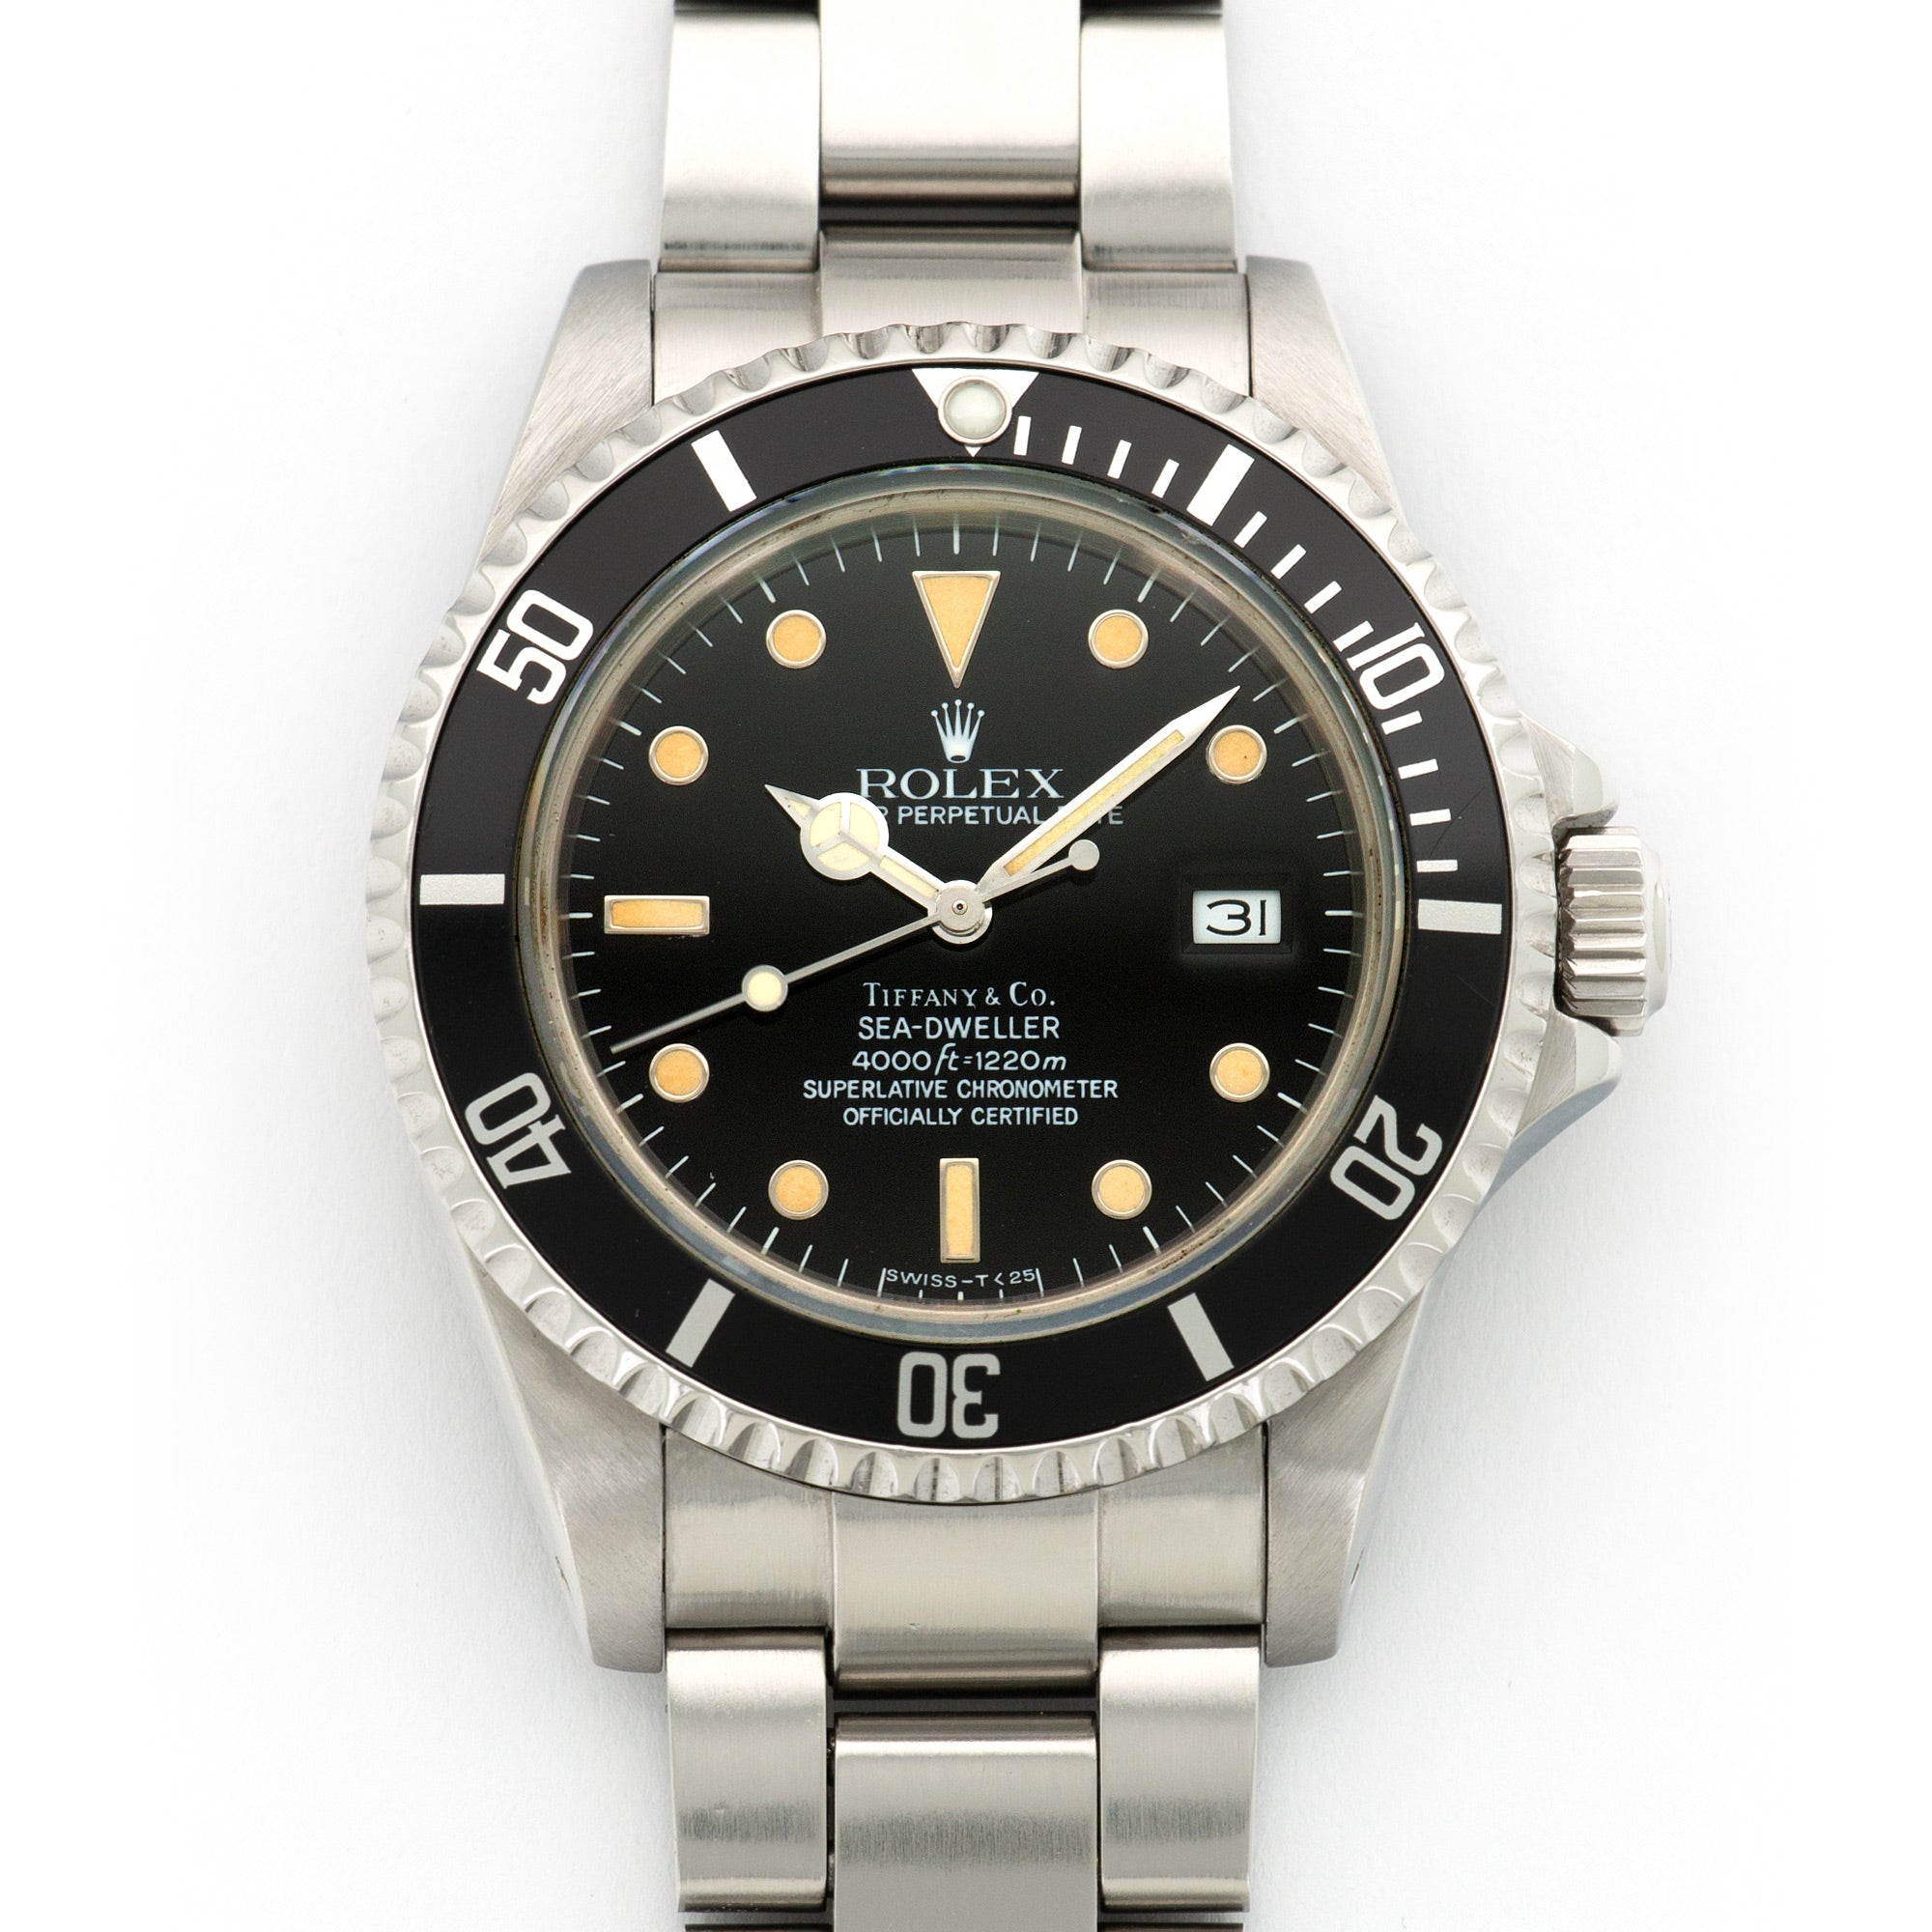 Rolex - Rolex Sea-Dweller Watch, Ref. 16660 Retailed by Tiffany & Co. - The Keystone Watches